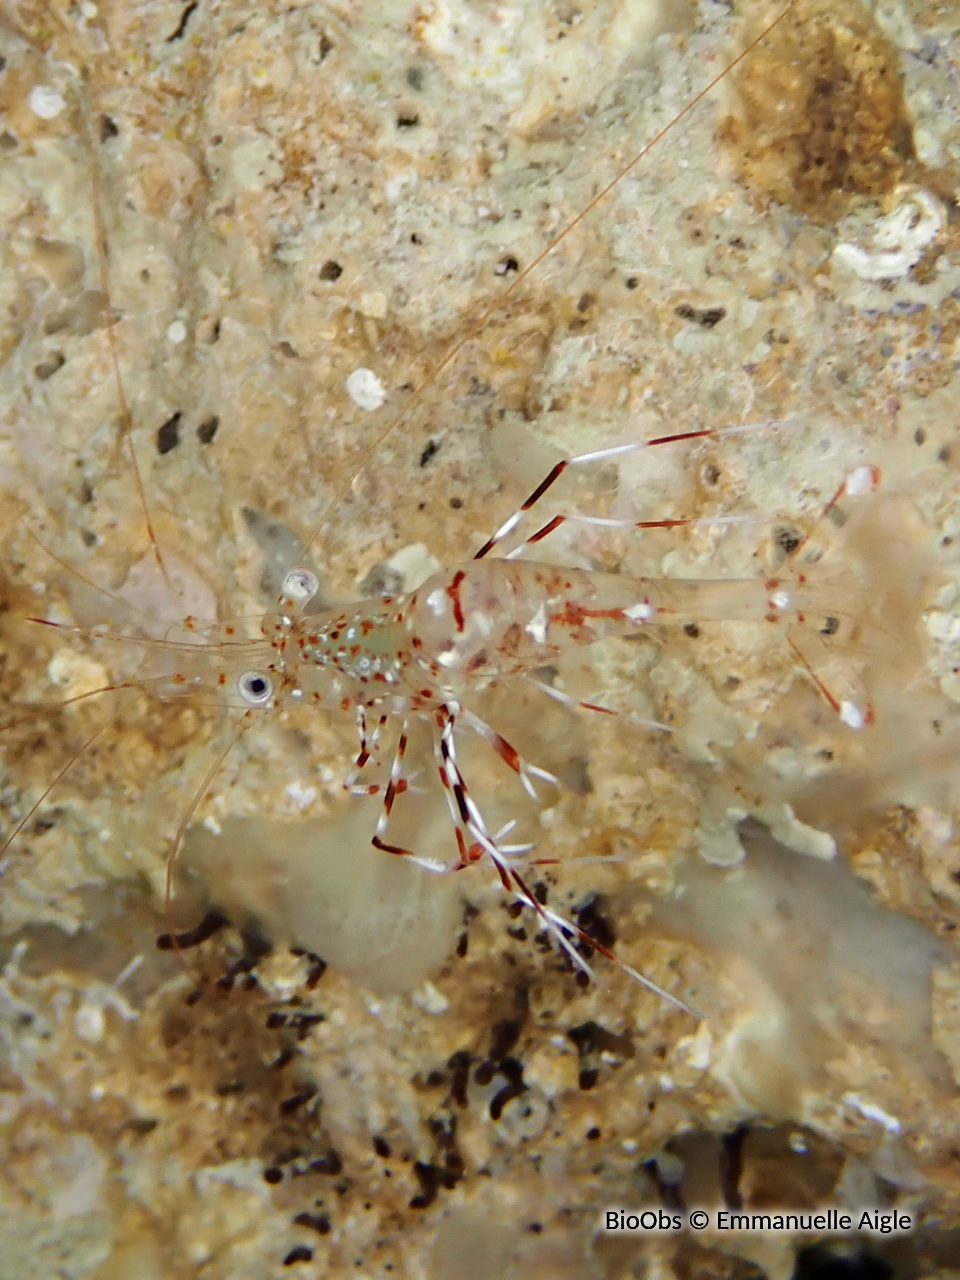 Crevette nettoyeuse de Bruun - Urocaridella antonbruunii - Emmanuelle Aigle - BioObs